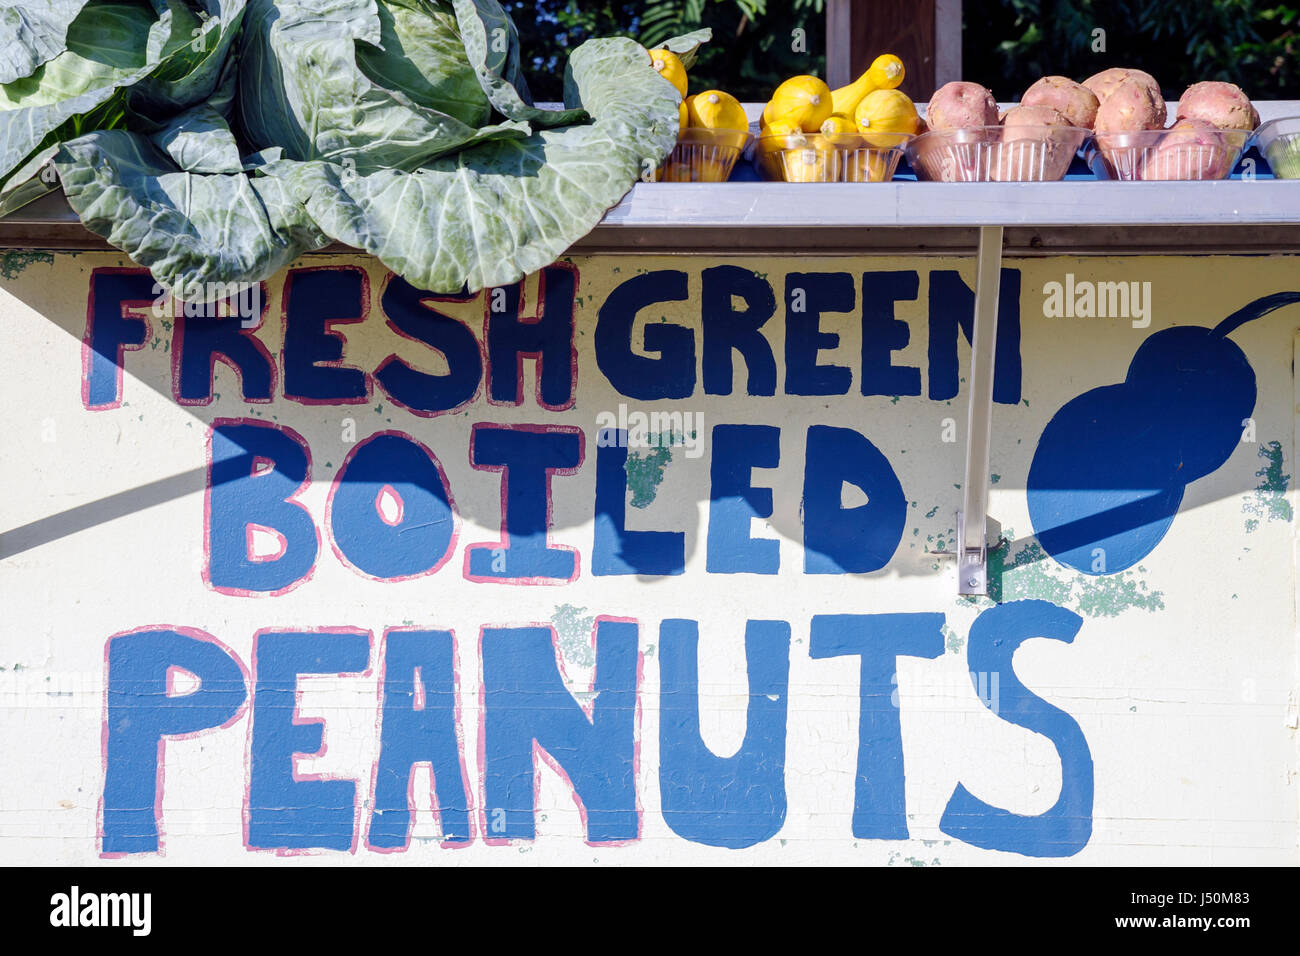 Alabama,Coffee County,Enterprise,Highway 84,roadside produce stand,fresh green boiled peanuts,AL080520042 Stock Photo